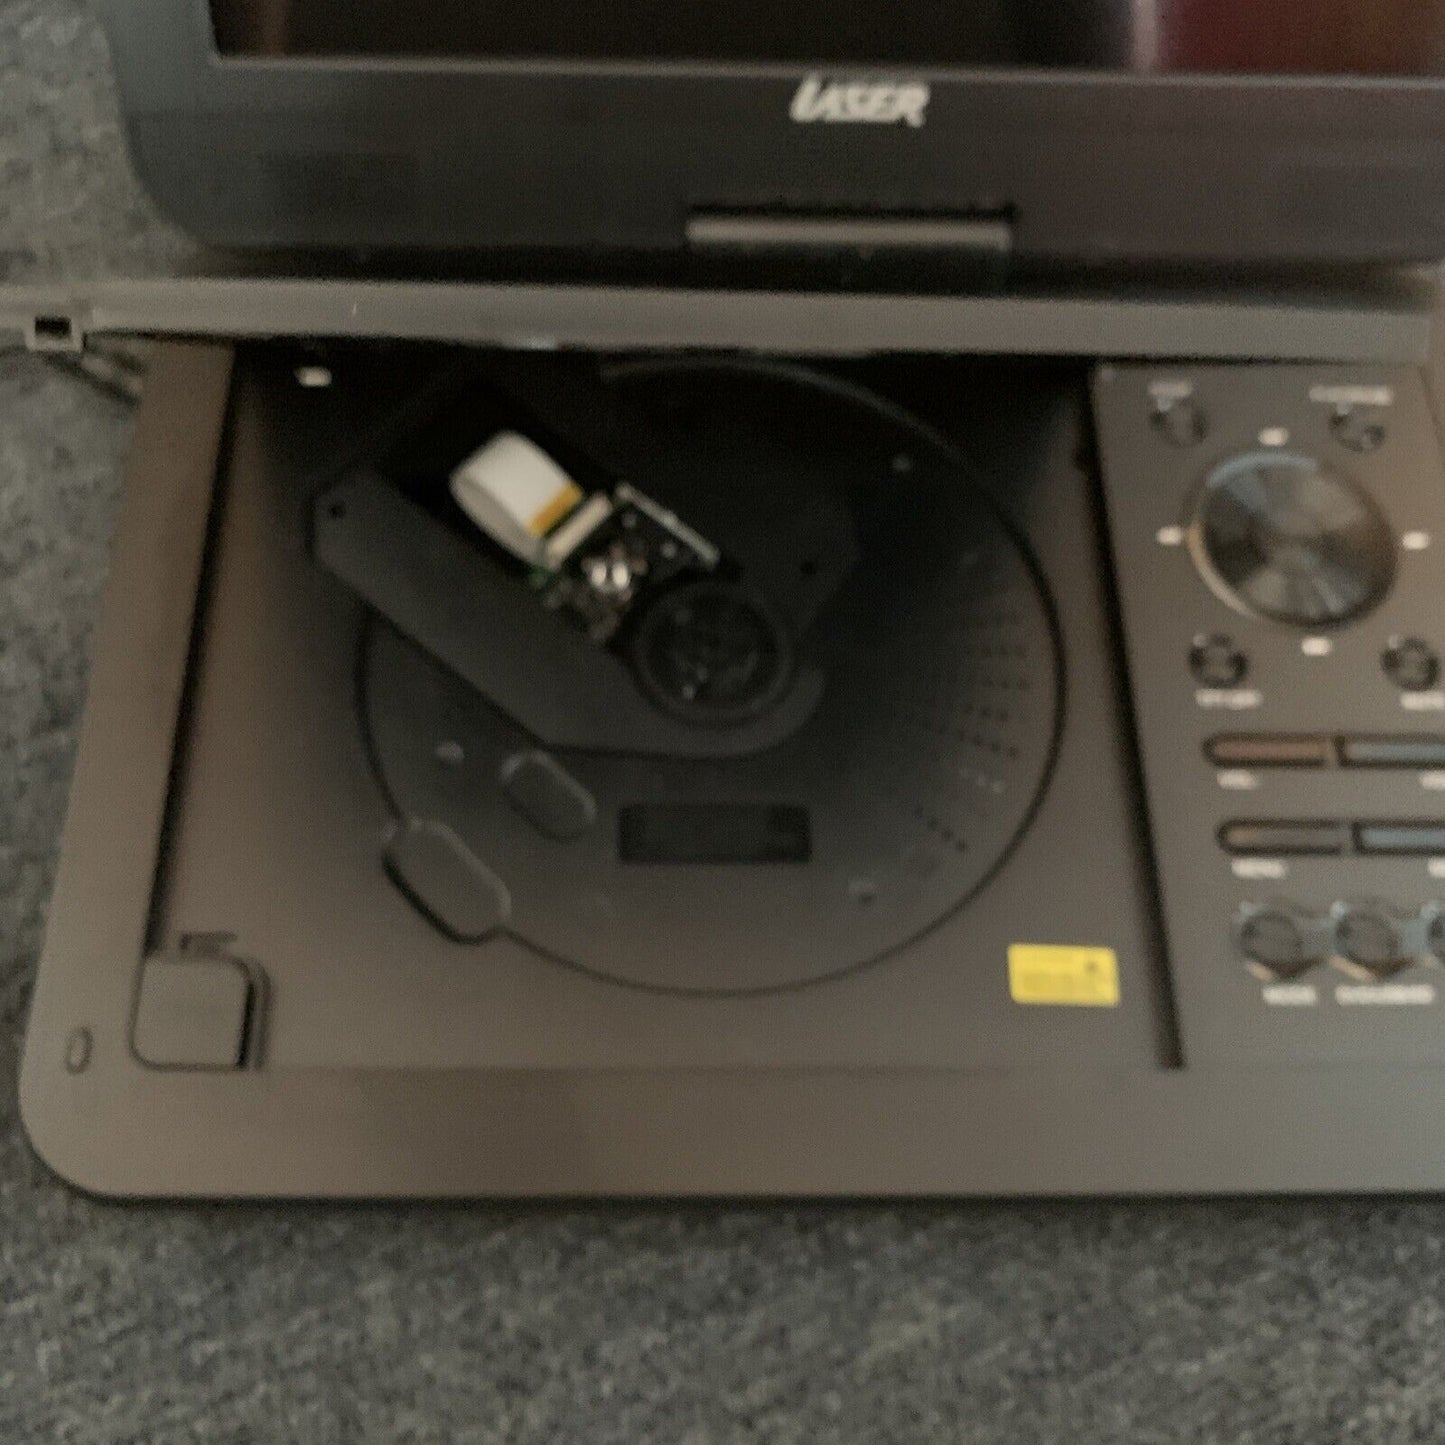 Laser 10 inch Portable DVD Player, Black - DVDPT10C All Regions